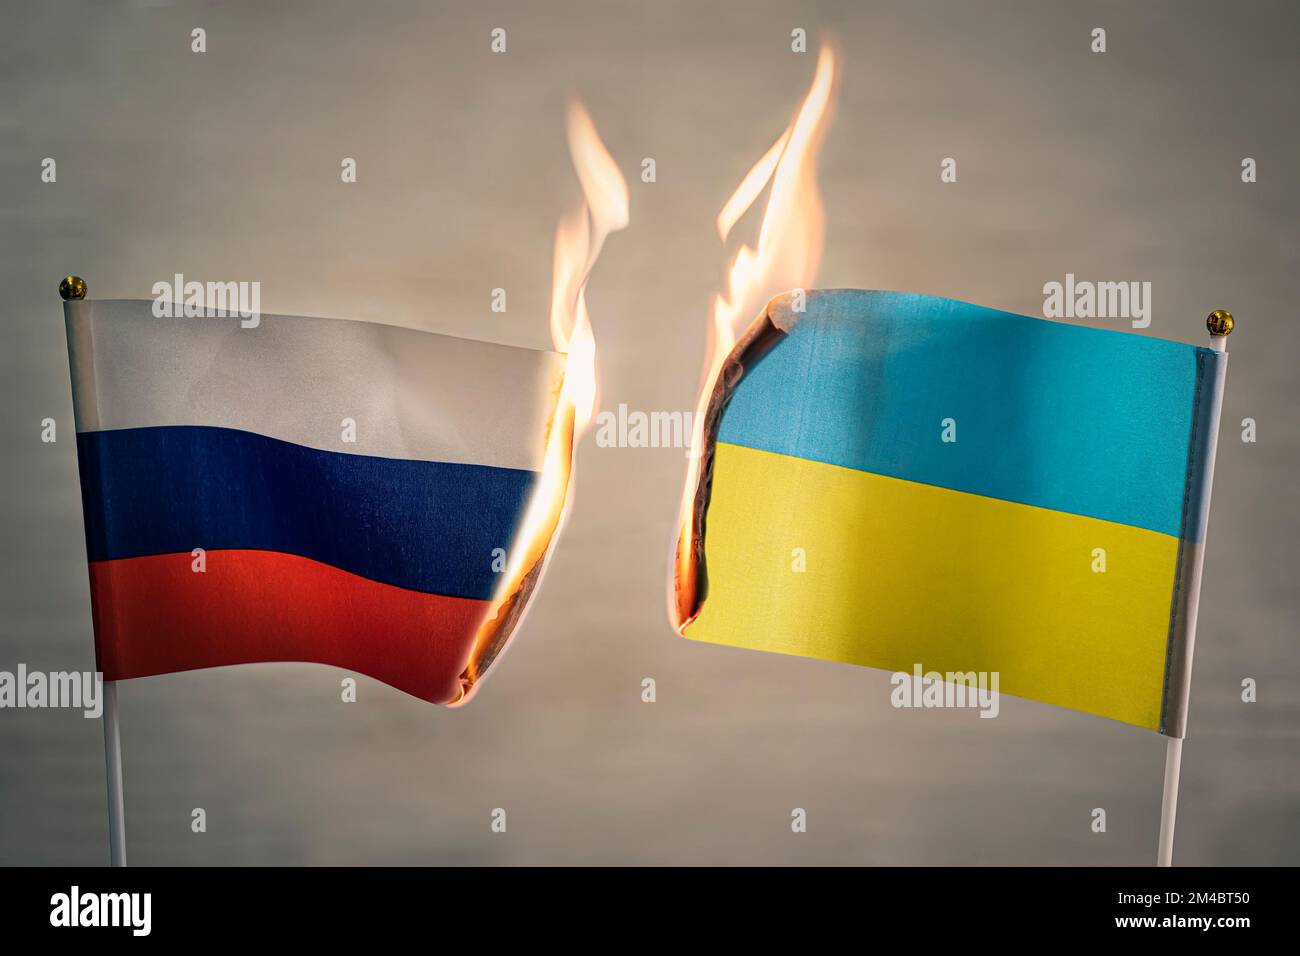 Russia-Ukraine war. Political tension. Hypertension. Management crisis. Uneasy environment. Natural gas crisis and economic sanctions. Stock Photo